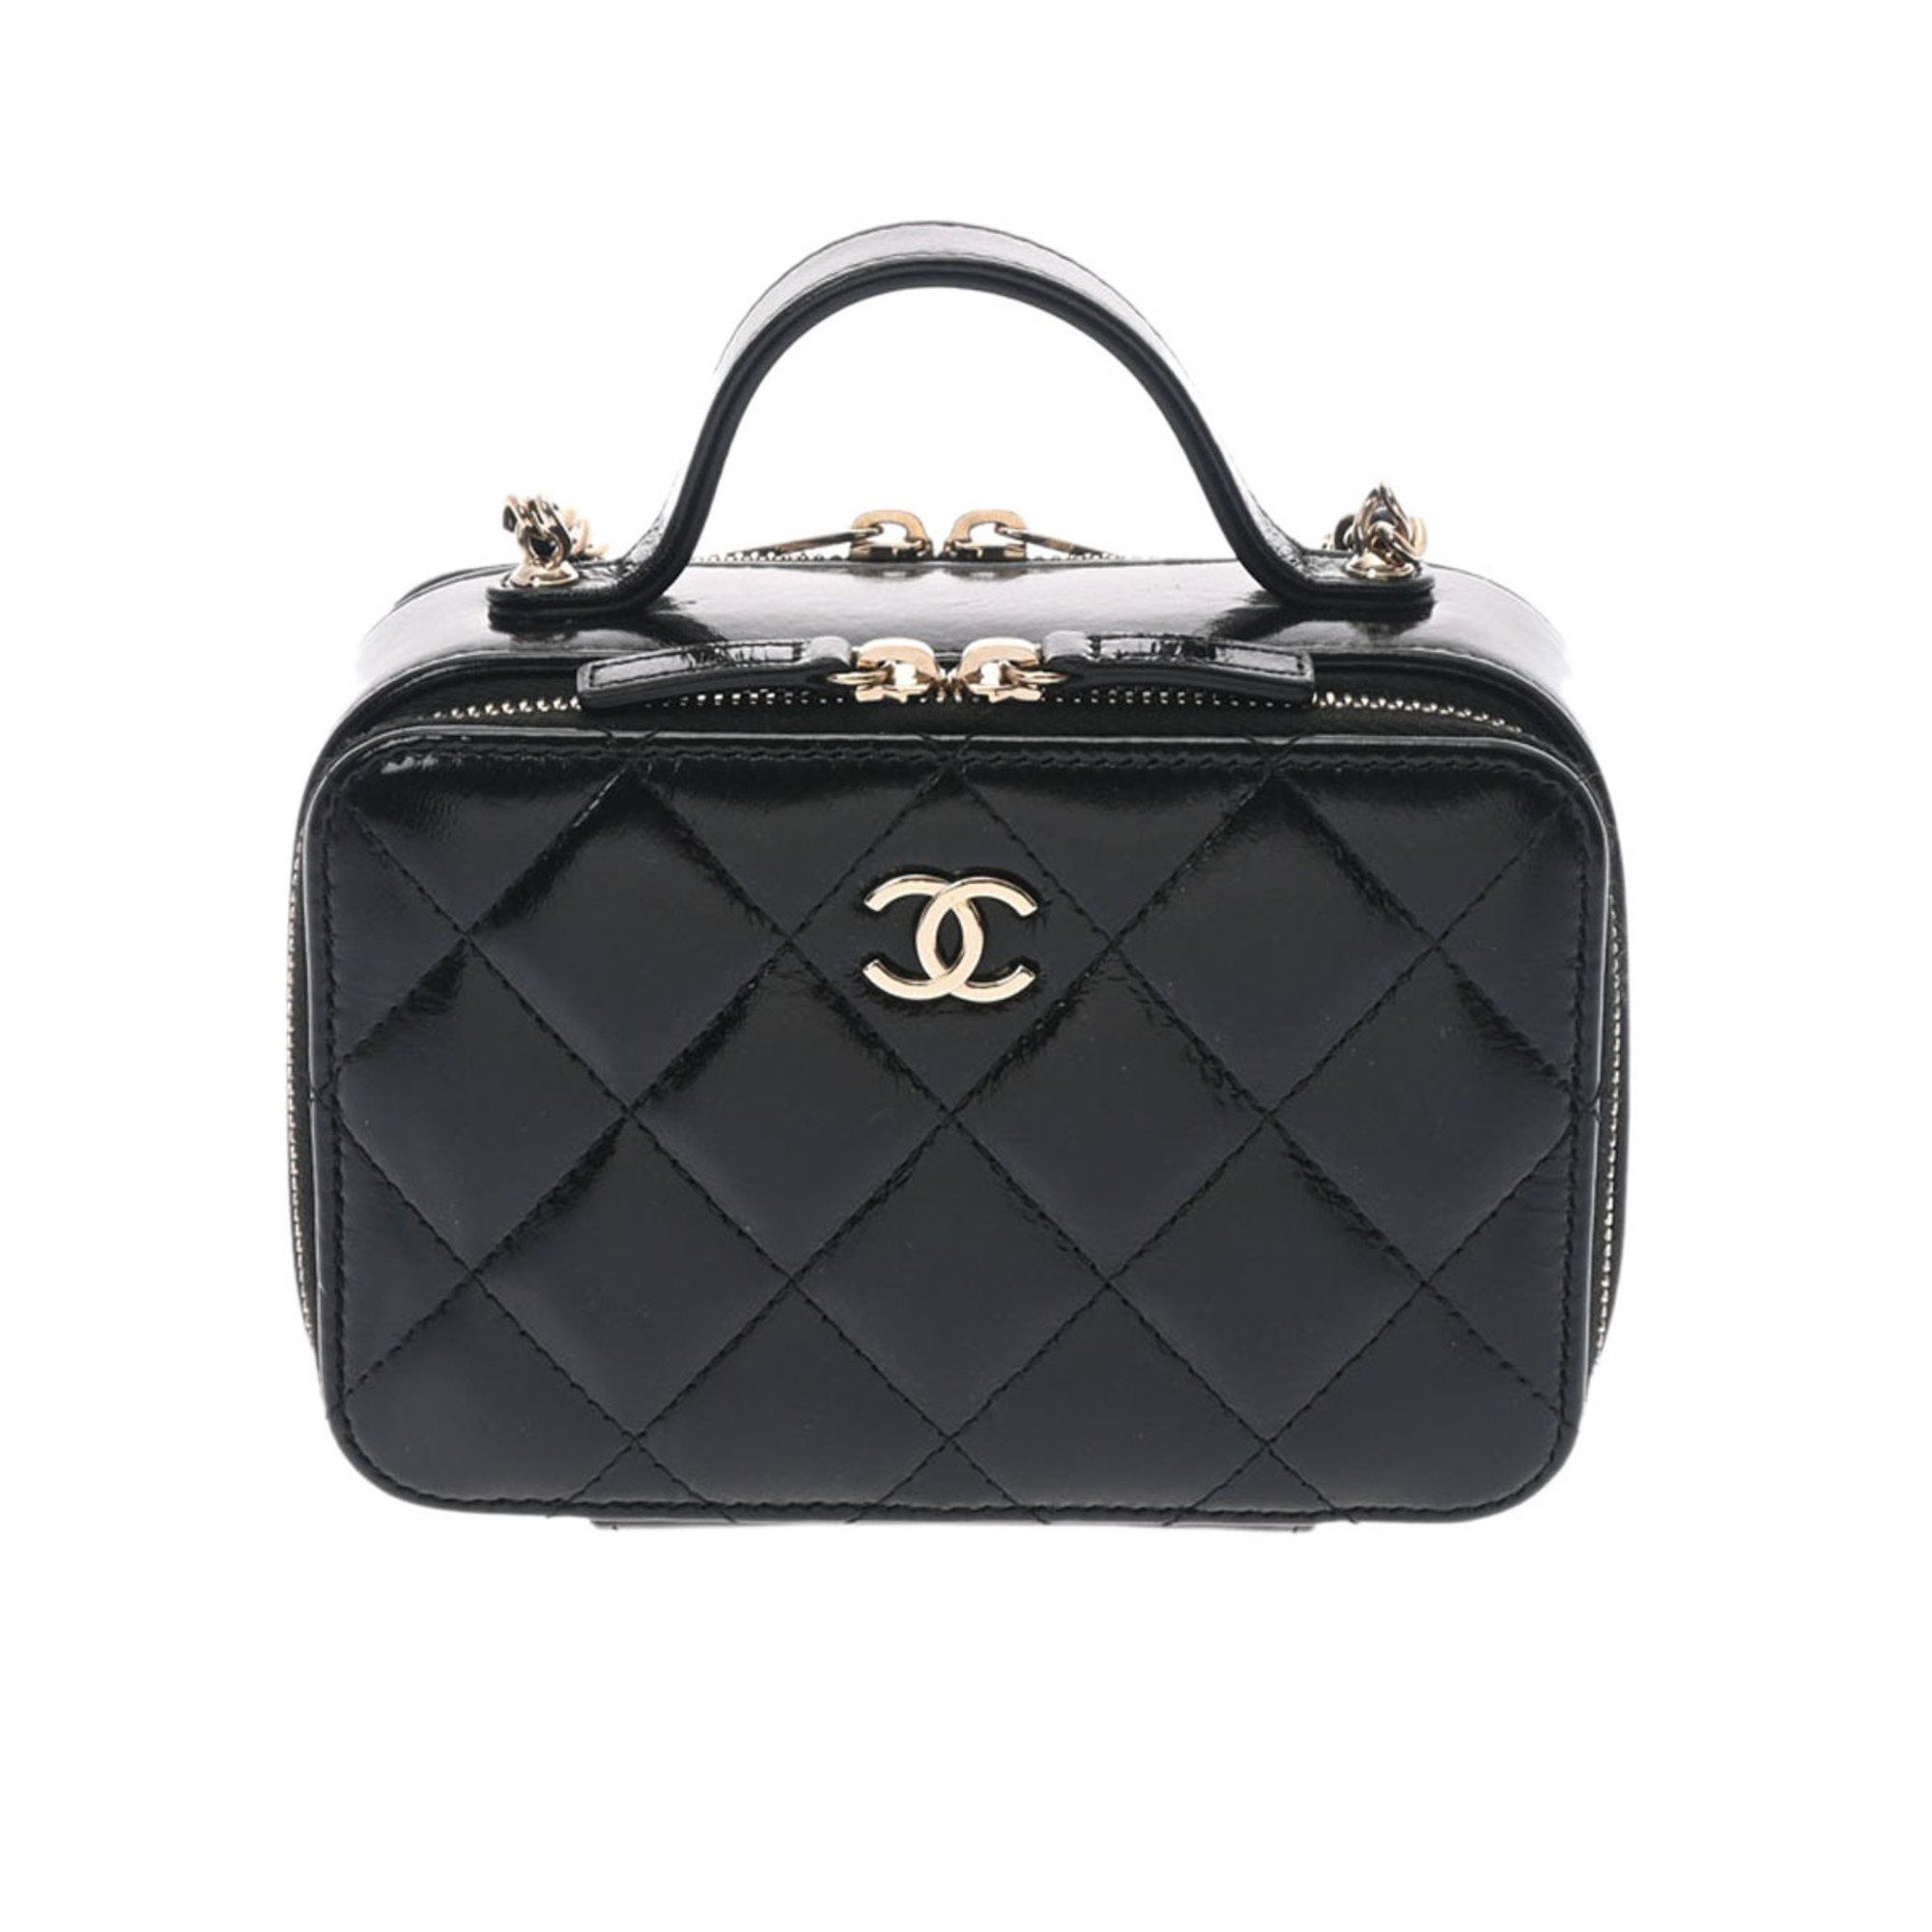 Chanel Chanel Matelasse Chain Tote Beige A91046 Ladies Caviar Skin